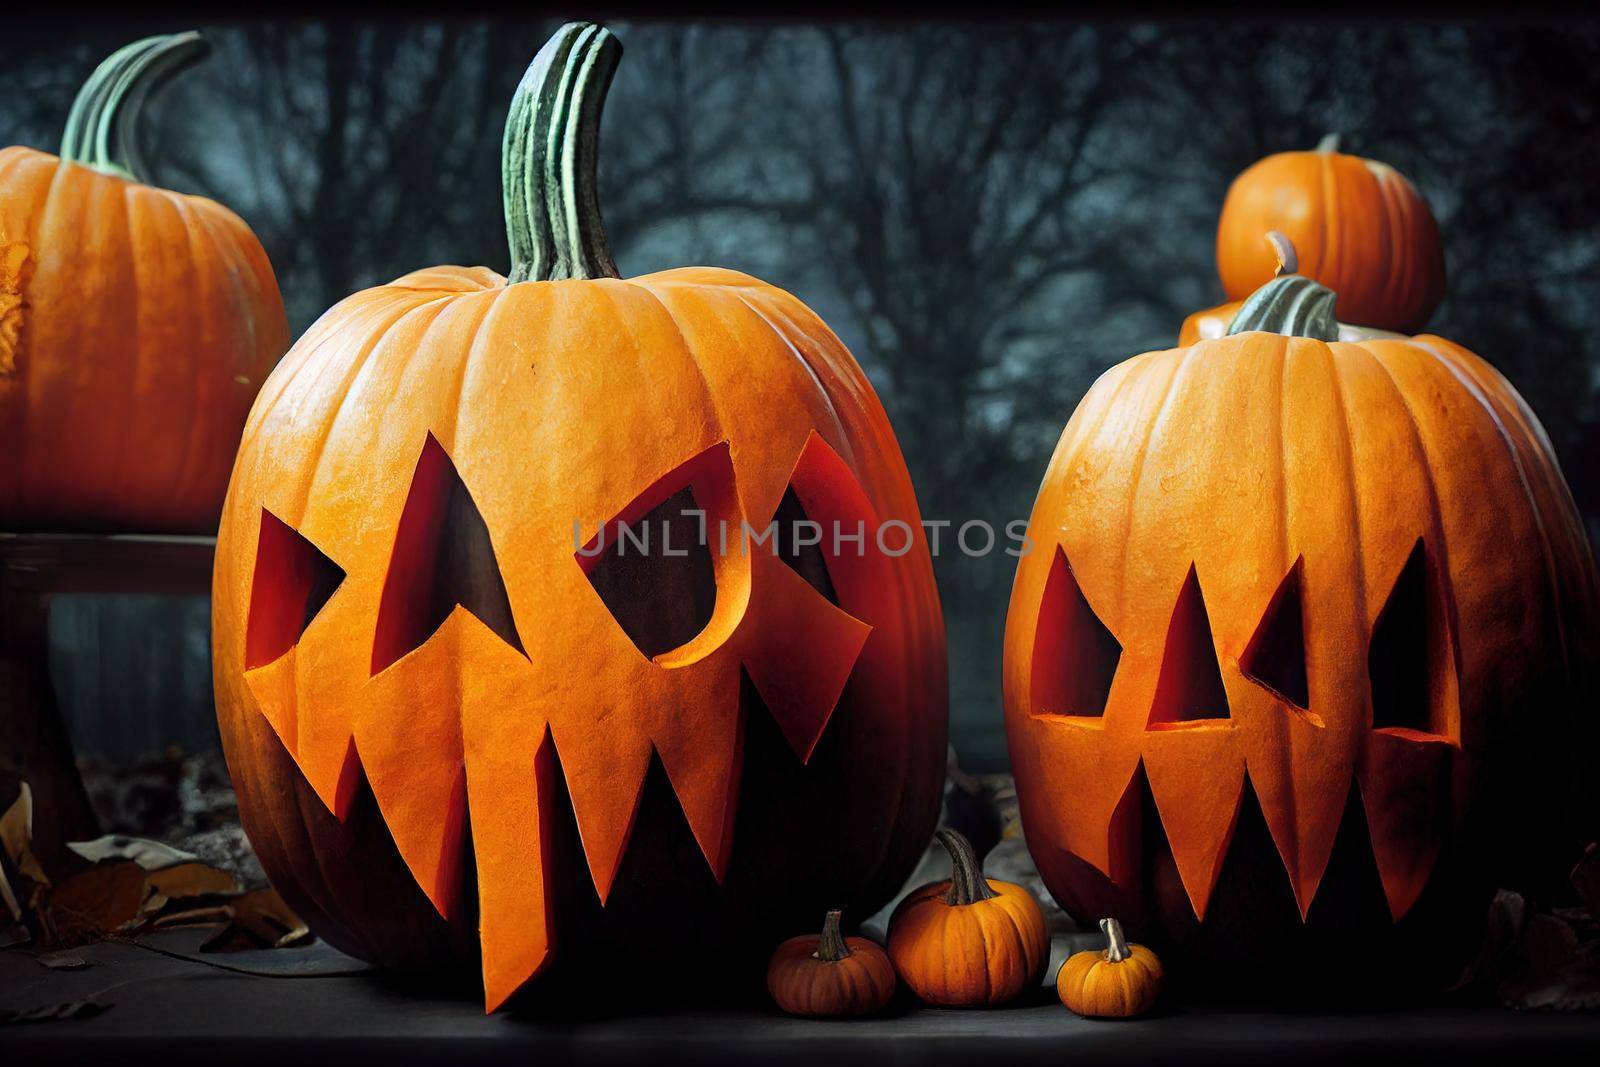 Skull style looking halloween pumpkins in studio light by 2ragon